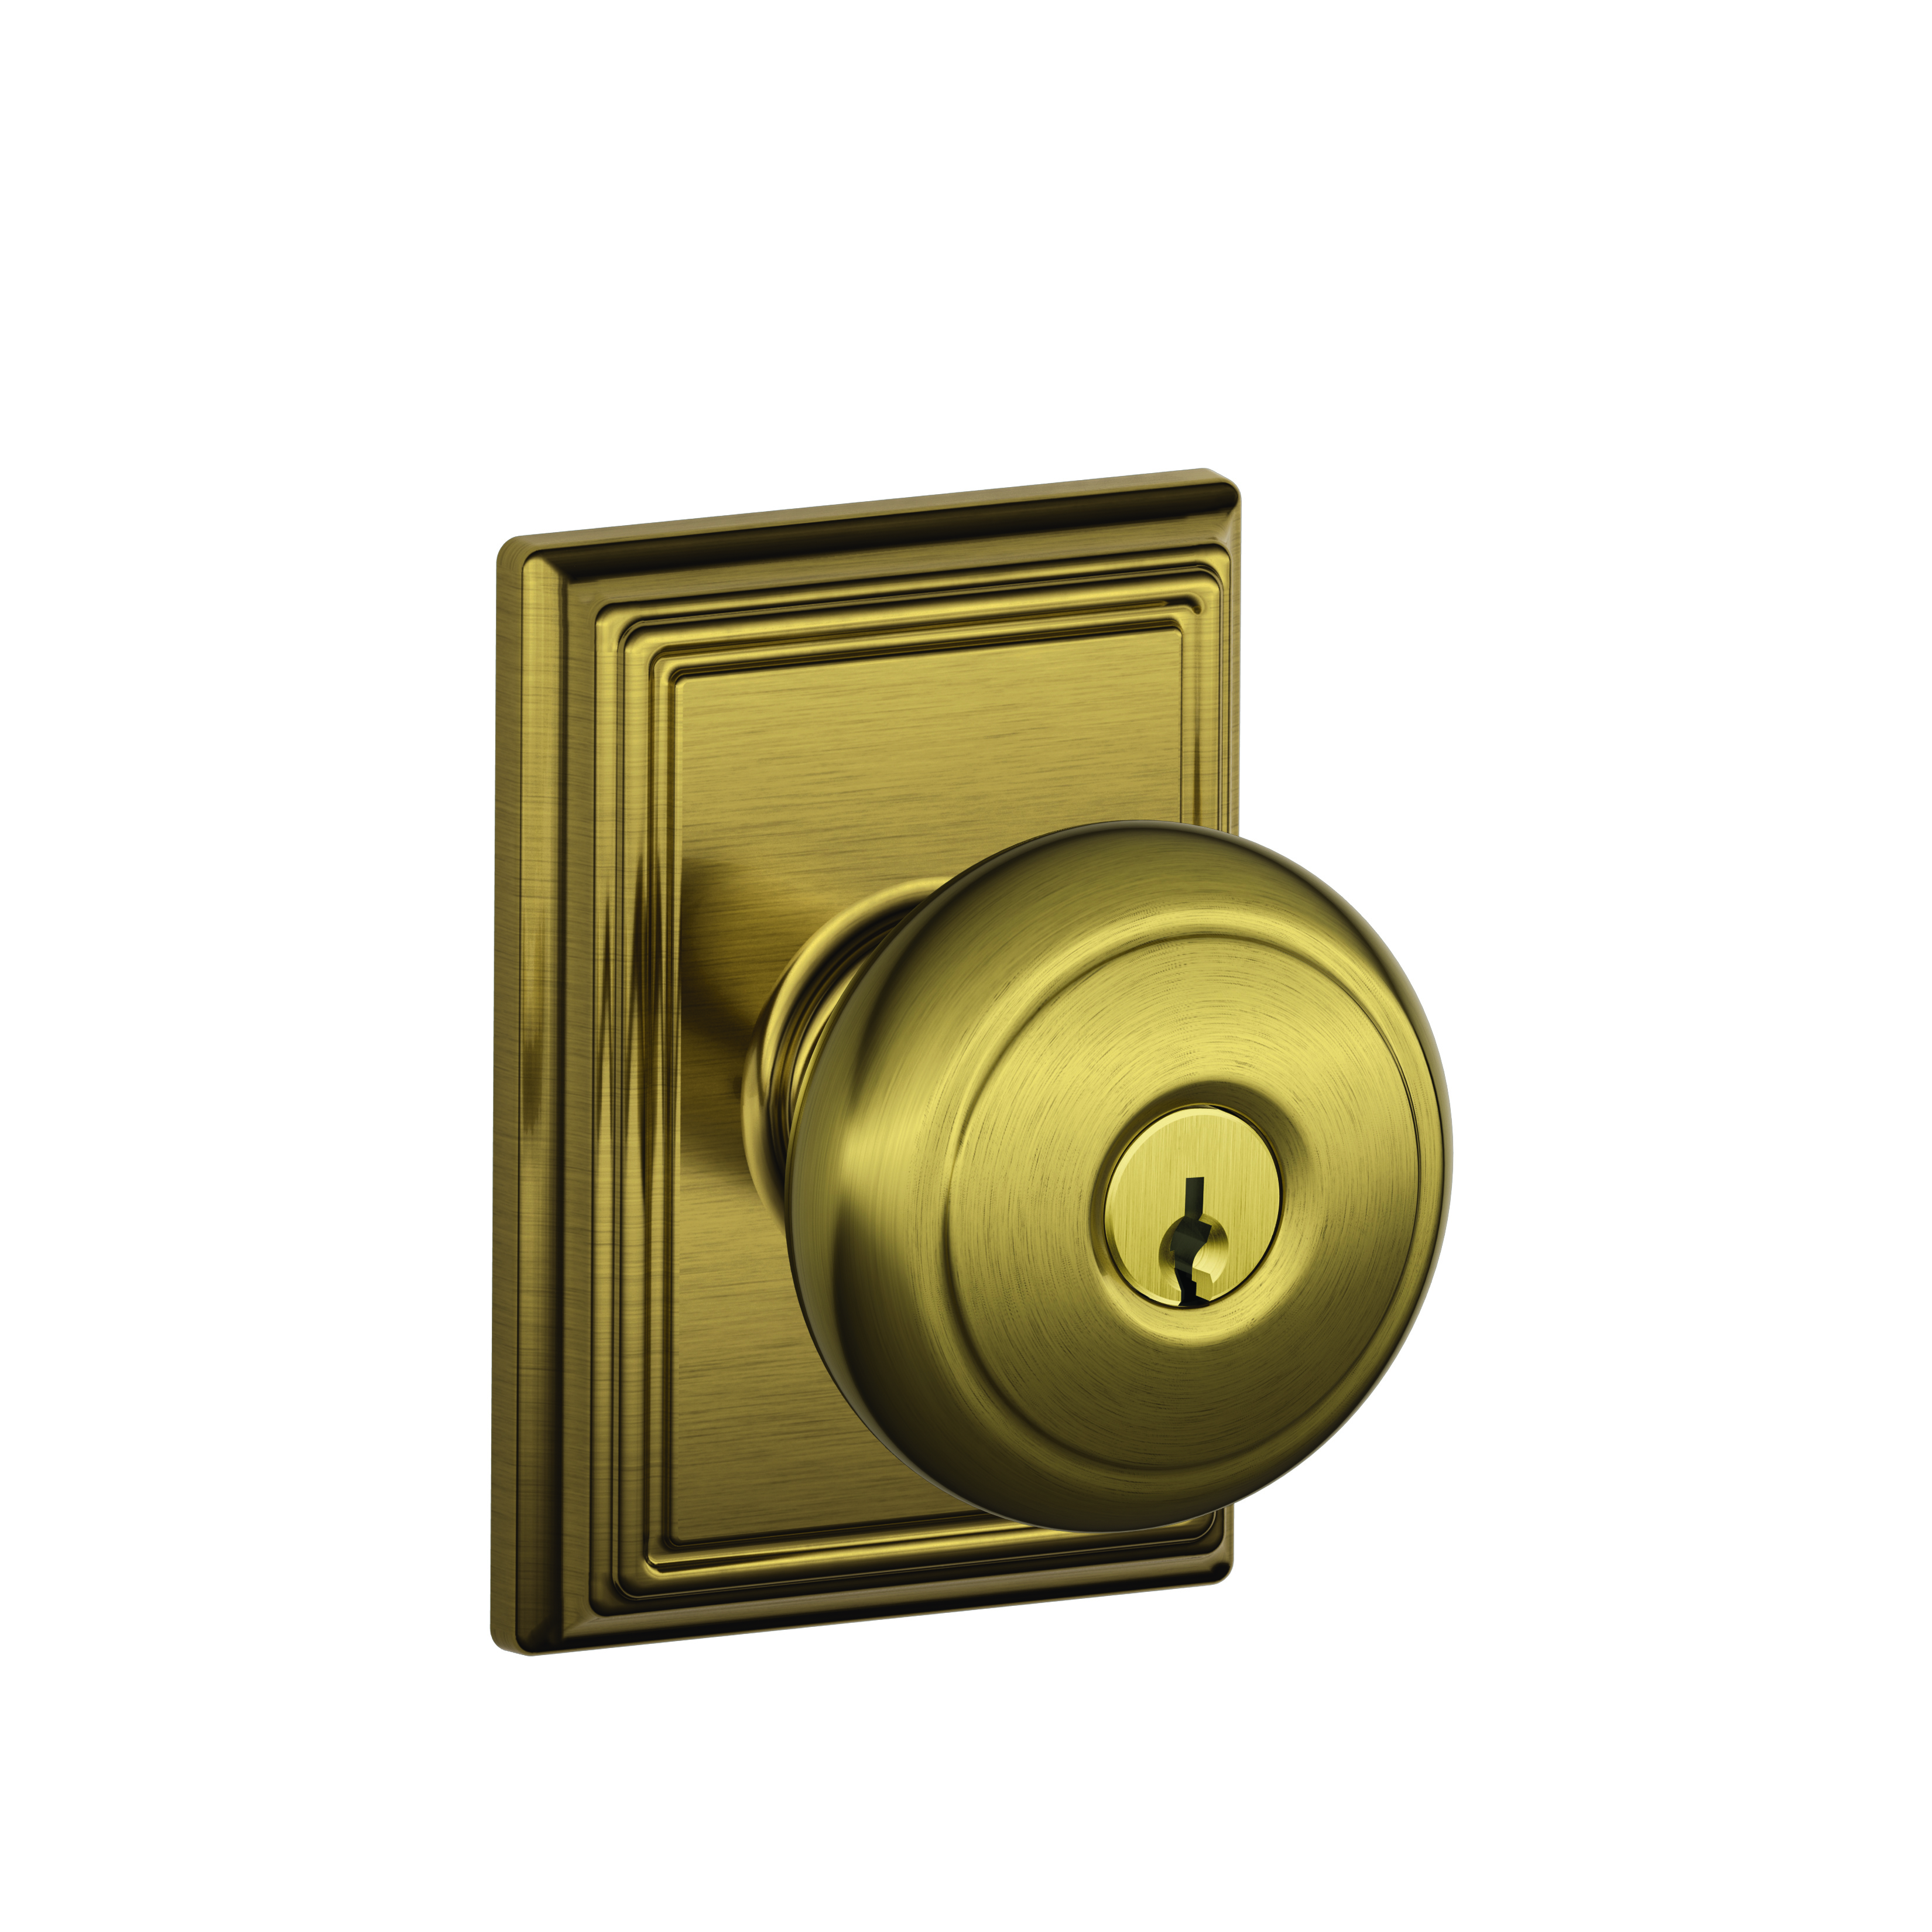 Andover Knob Keyed Entry Lock